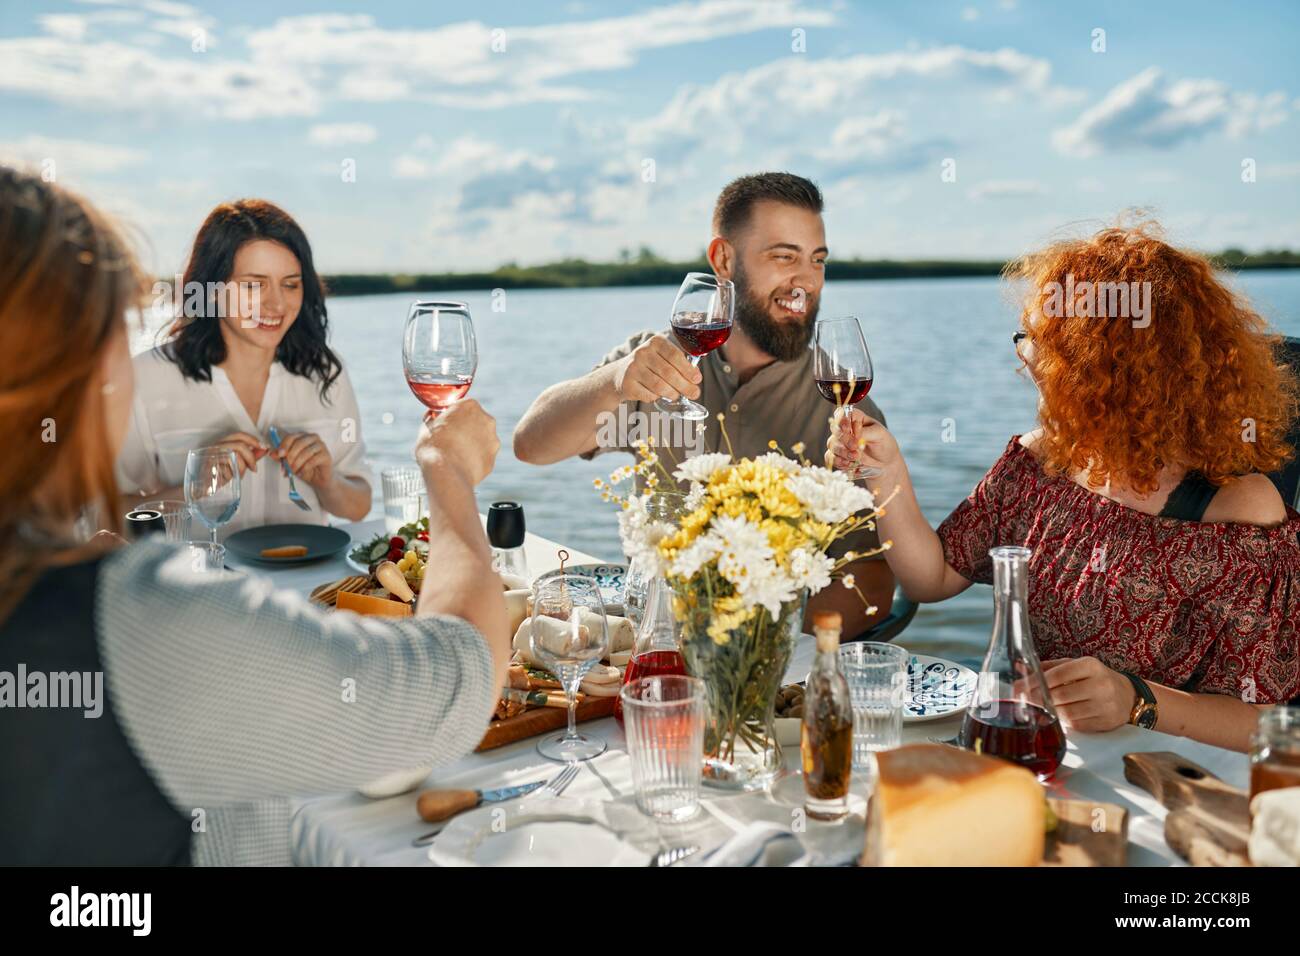 Friends having dinner at a lake rasing wine glasses Stock Photo